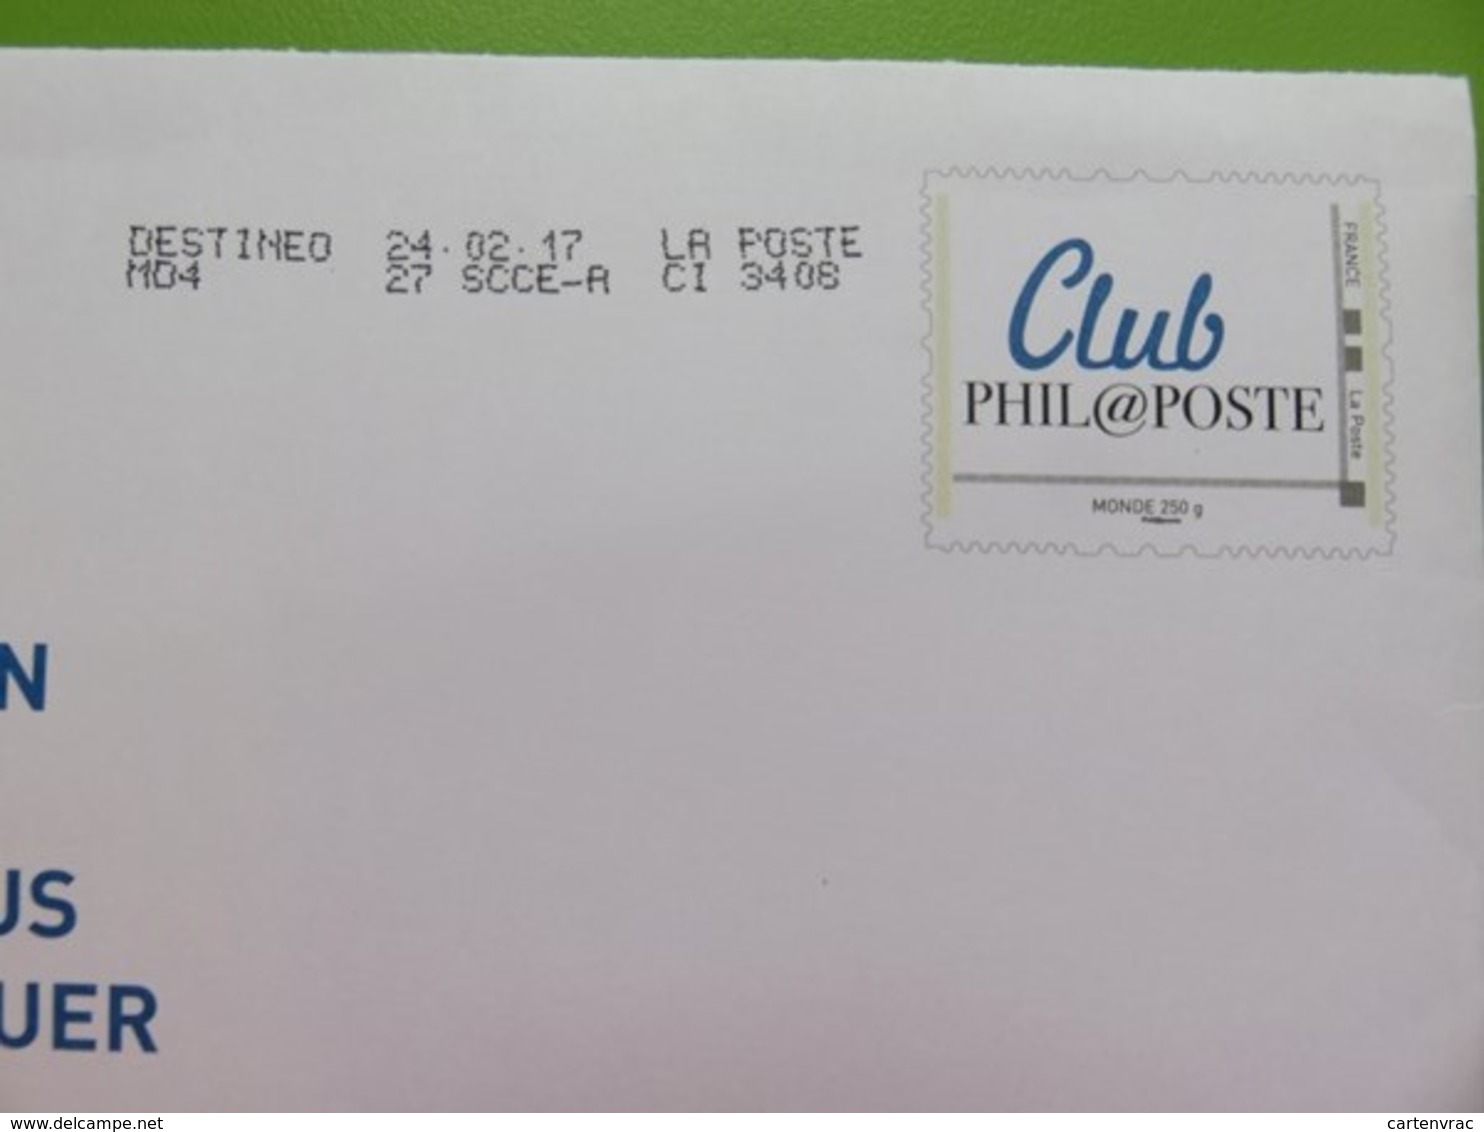 PAP - Entier Postal - Club Phil@poste - Philaposte - Monde 250 G - Destinéo - 24.02.17 - Prêts-à-poster:Stamped On Demand & Semi-official Overprinting (1995-...)